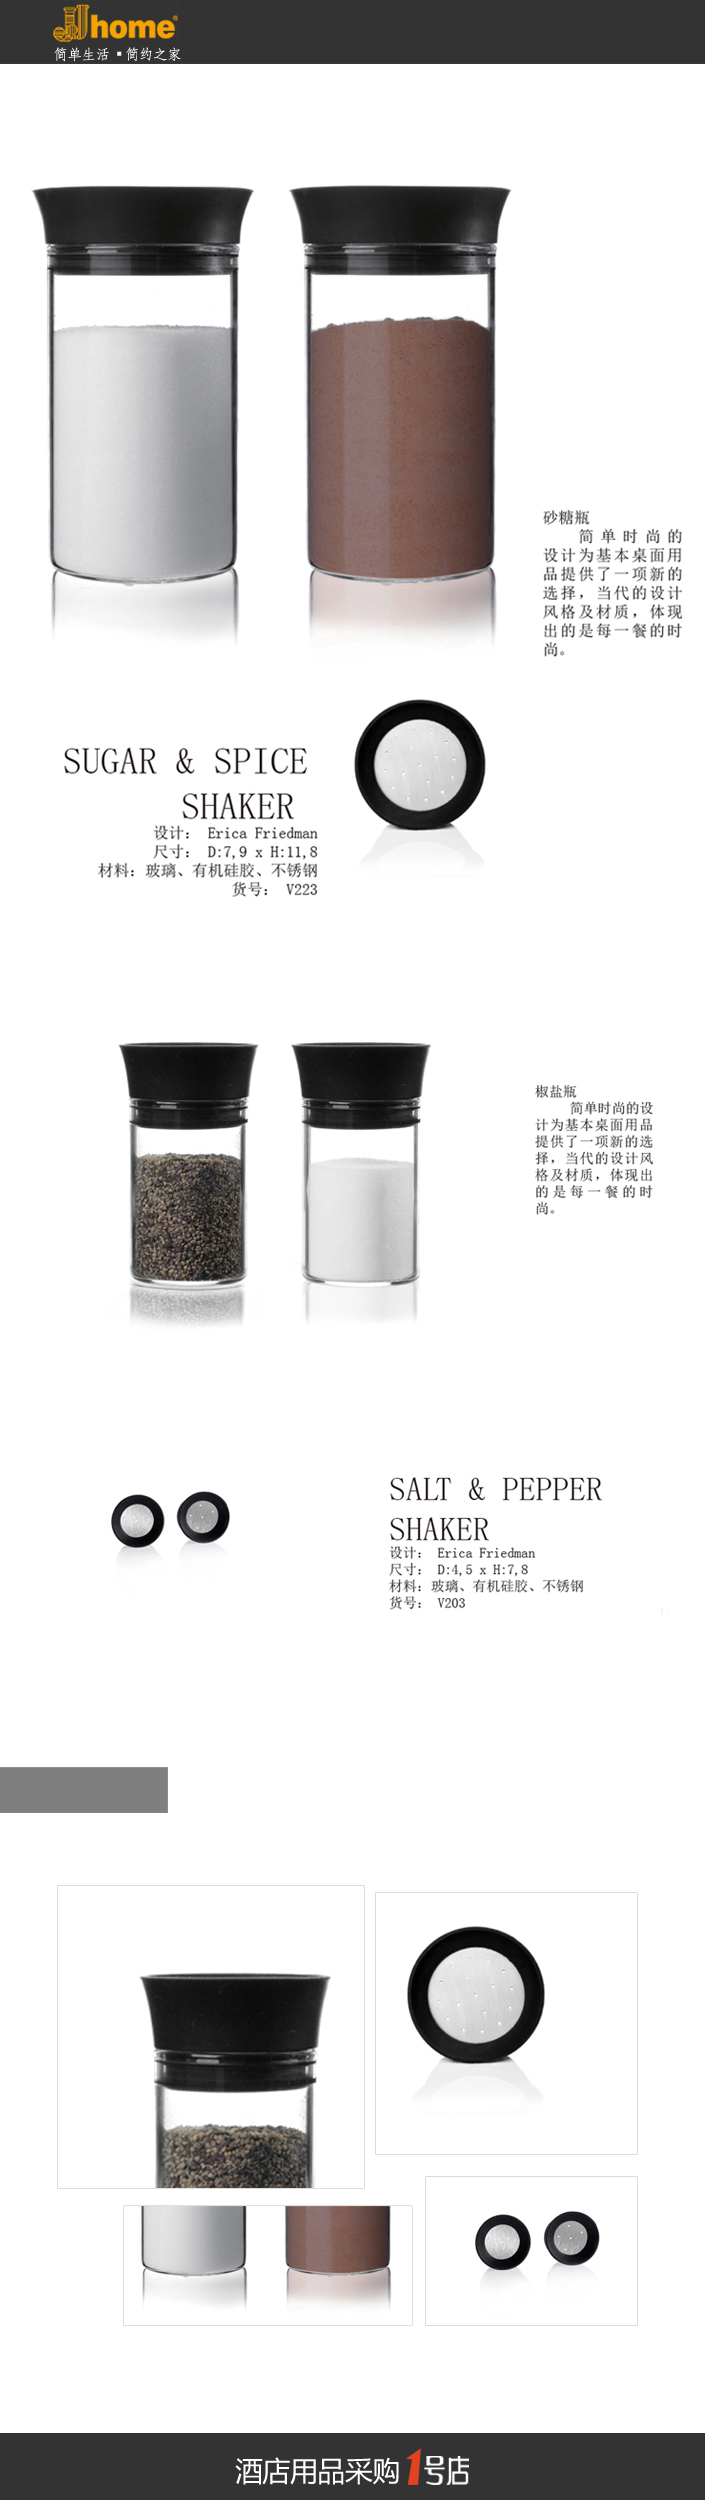 VIVA北欧活力 Skagen Sugar & Spice Shaker 耐热玻璃糖瓶
JJHOME酒店用品1号店